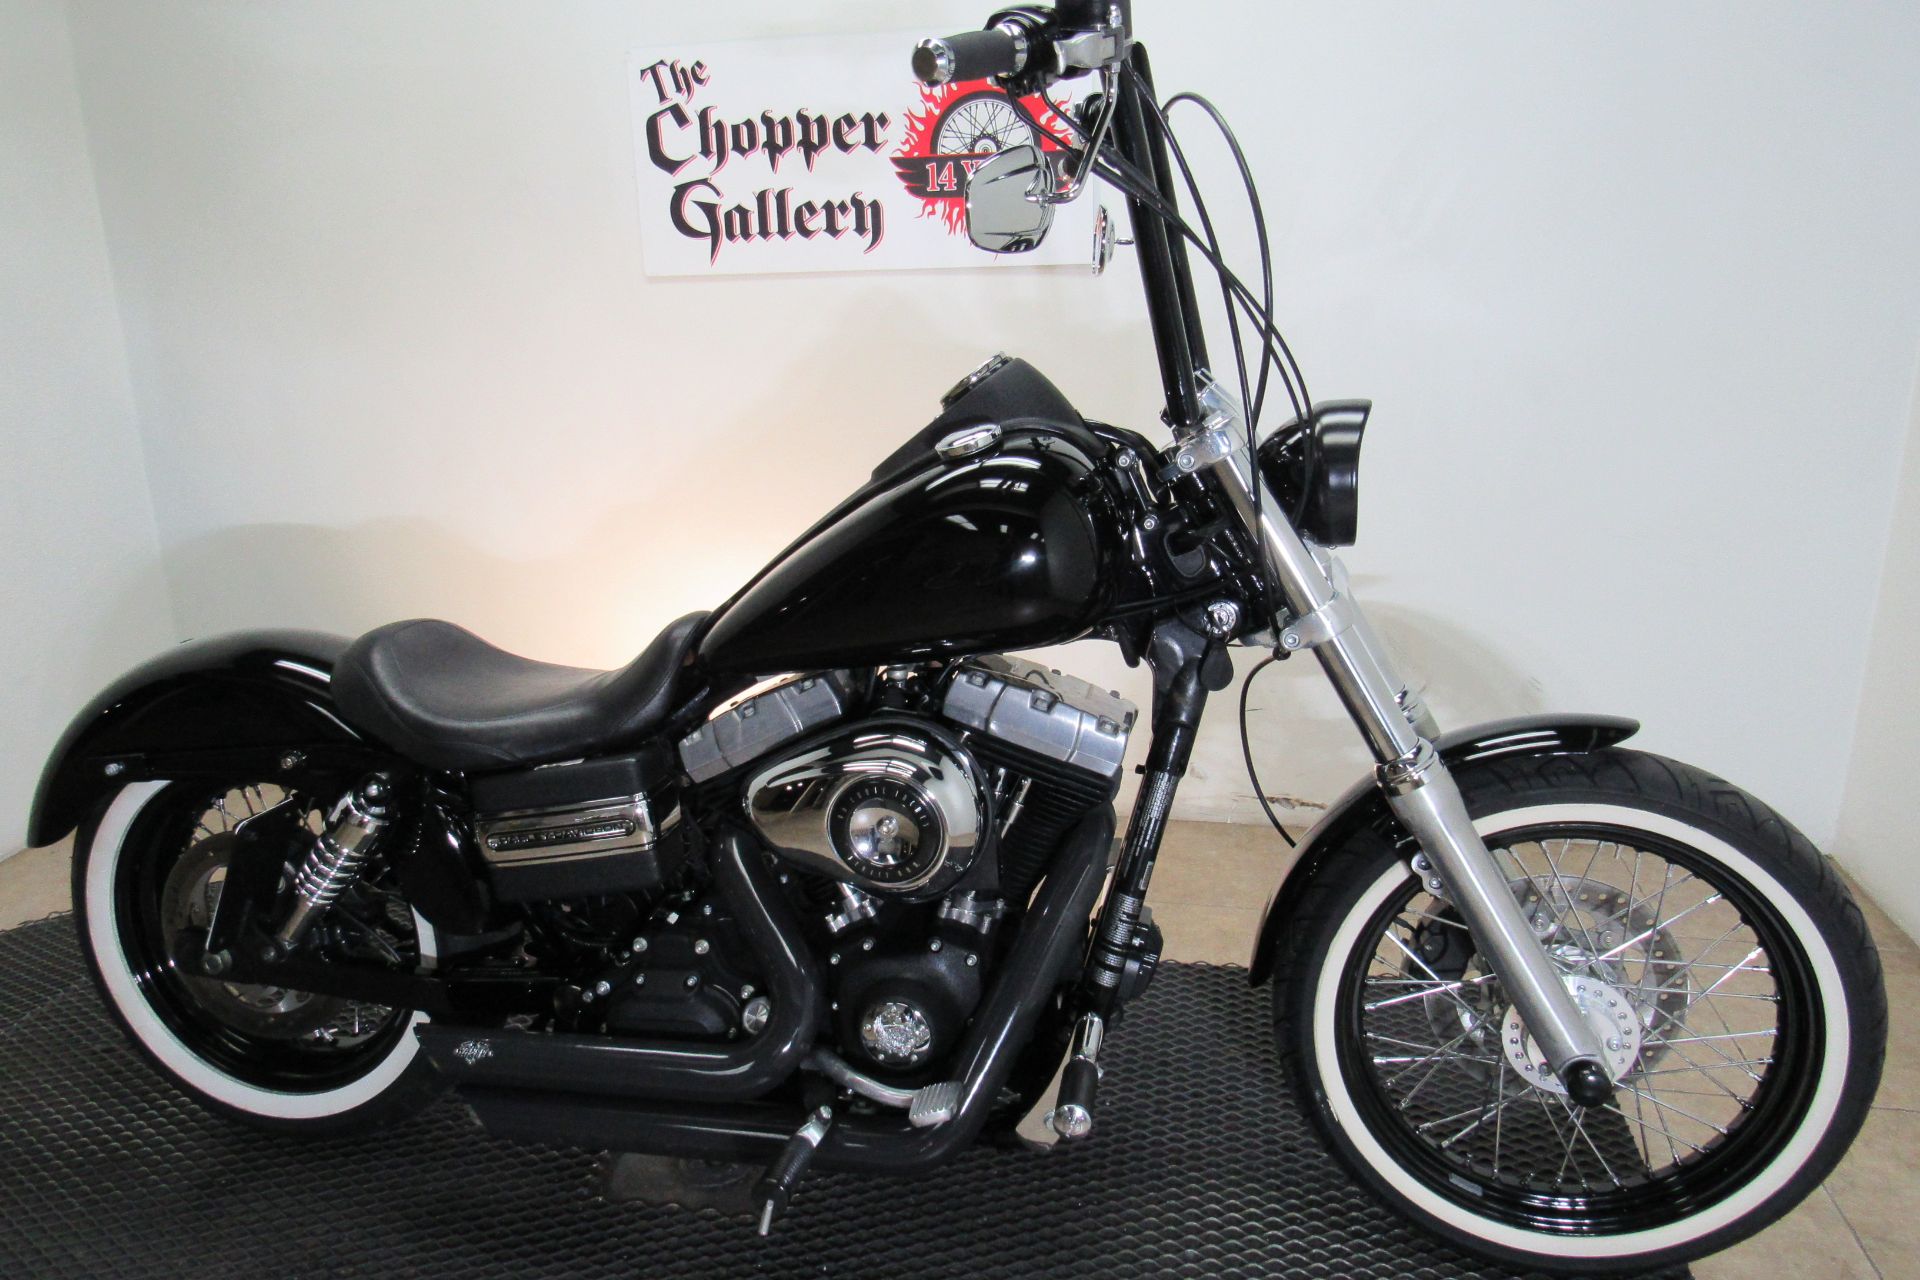 2011 Harley-Davidson Dyna® Street Bob® in Temecula, California - Photo 3